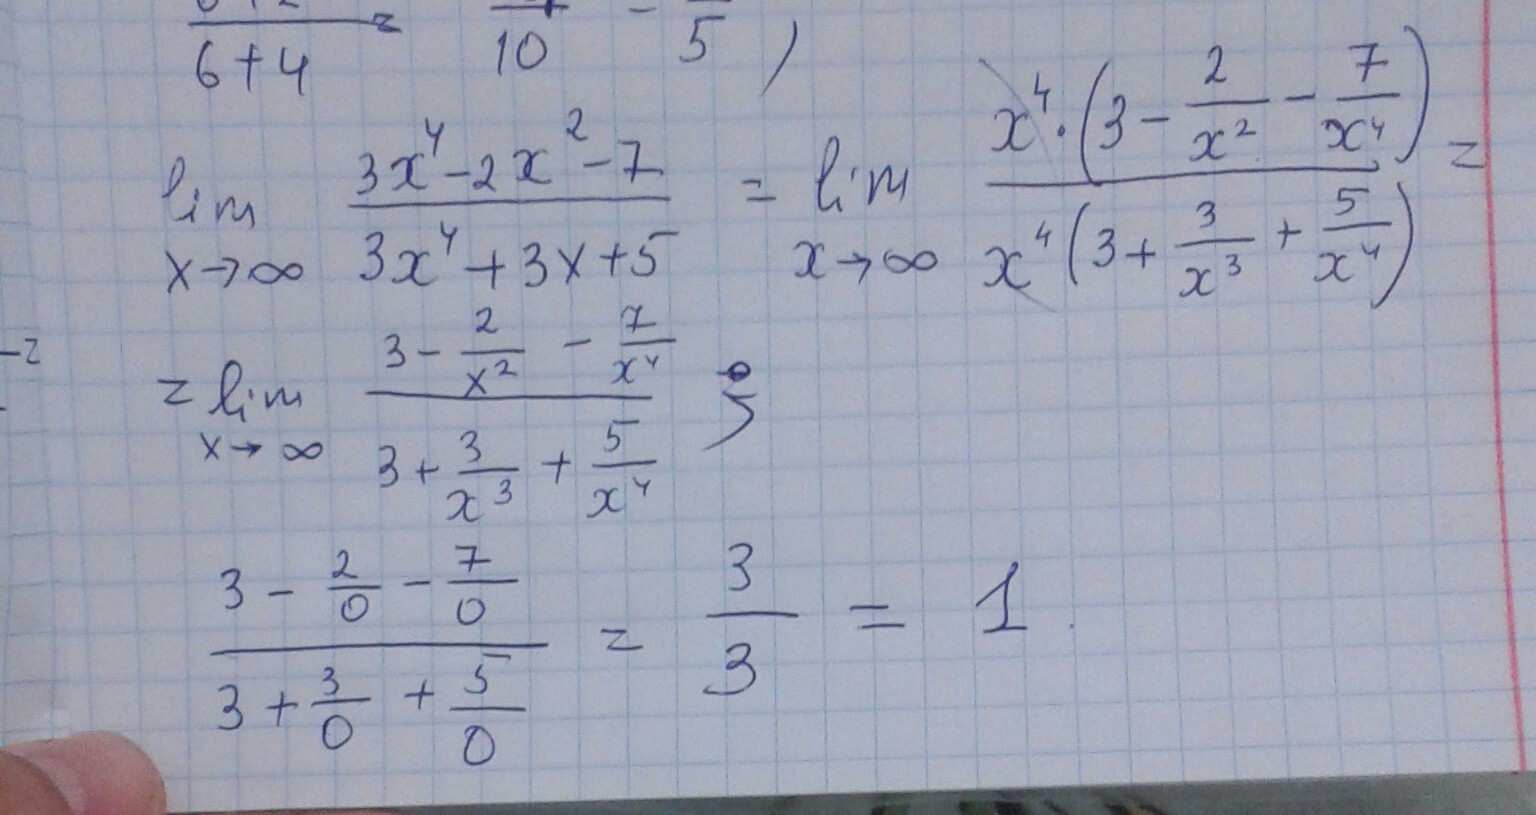 8x 1 40. Lim x стремится к бесконечности 2/x 2+3x. Lim x стремится к бесконечности x^2-4x+3/x+5. Lim x стремиться к бесконечности ( 2x/2x-3)^3x. Lim x стремится к бесконечности 3+x-5x4.